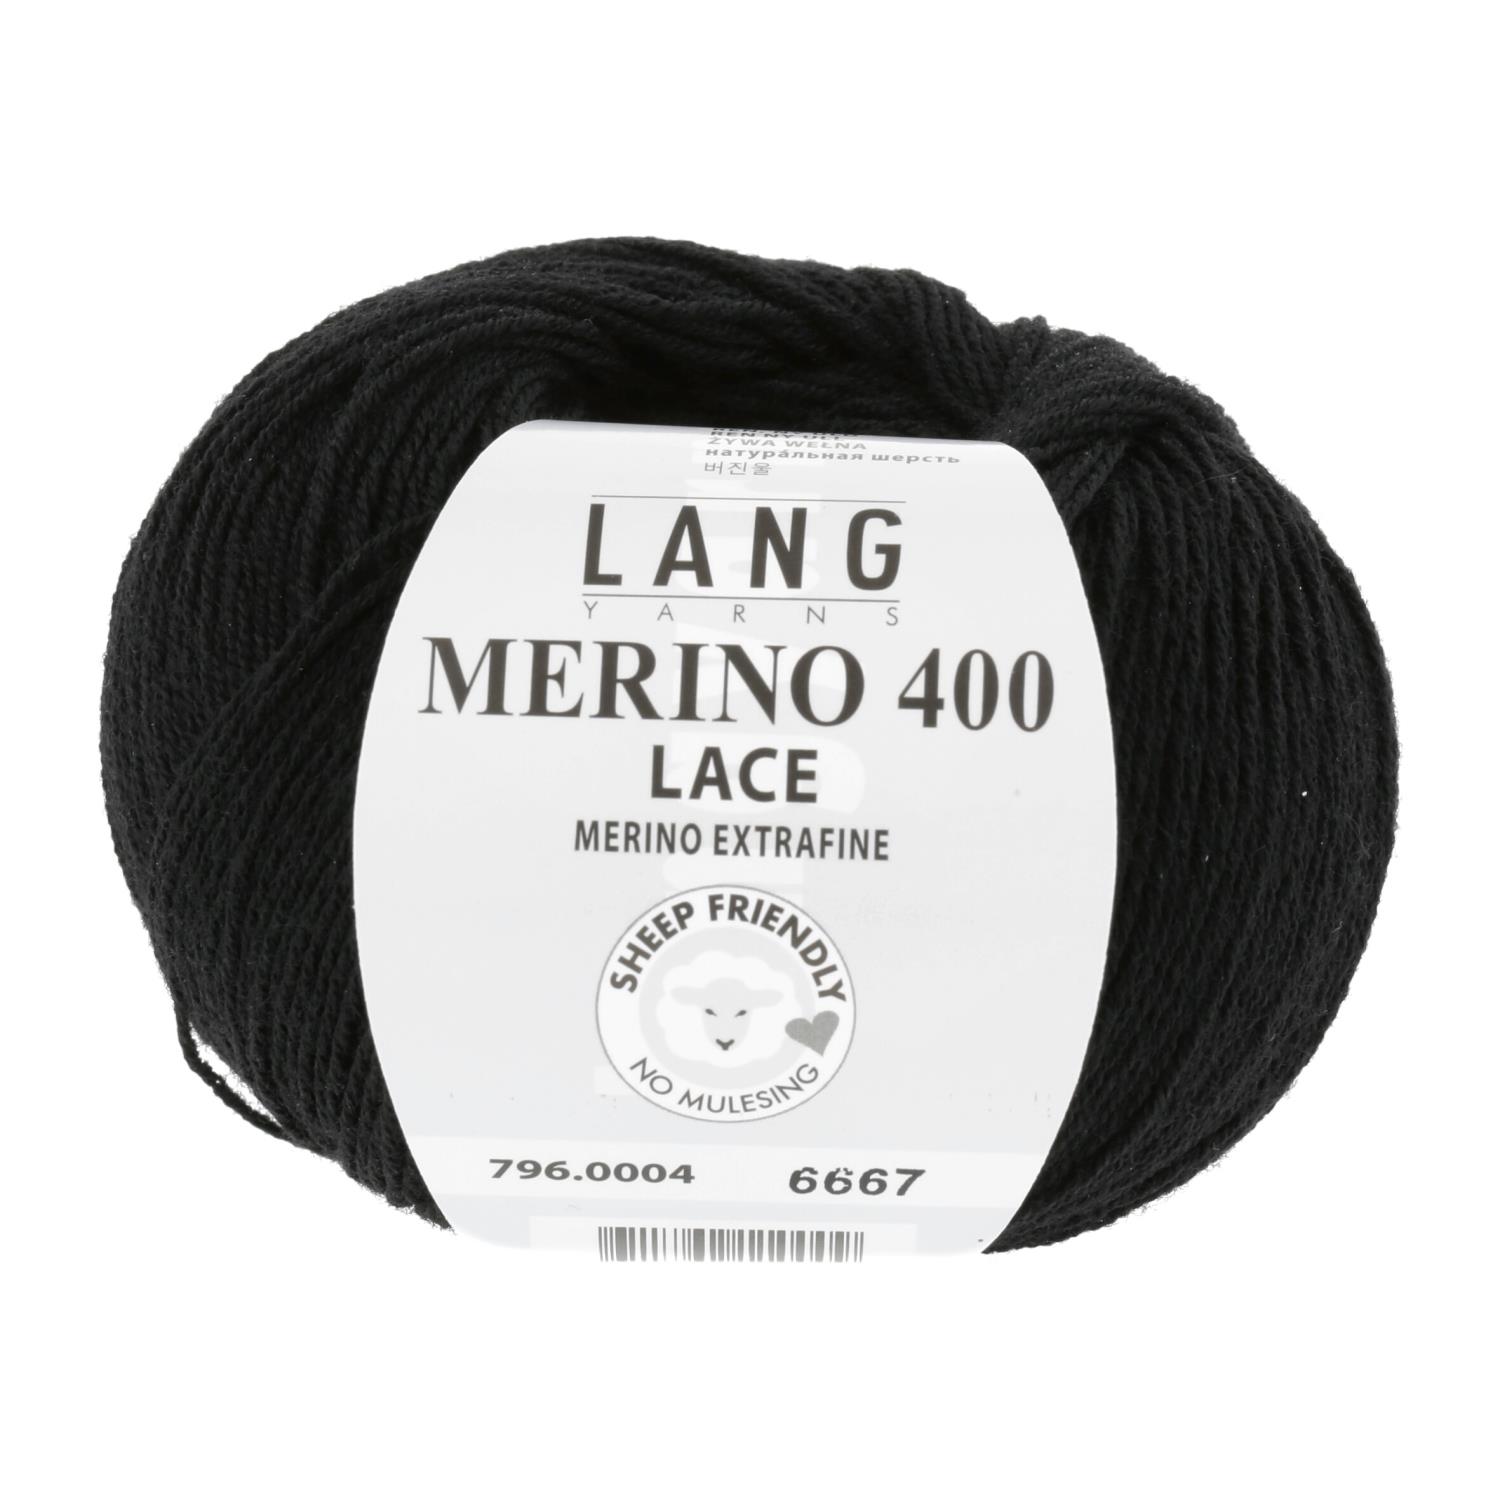 04 Merino 400 lace - black